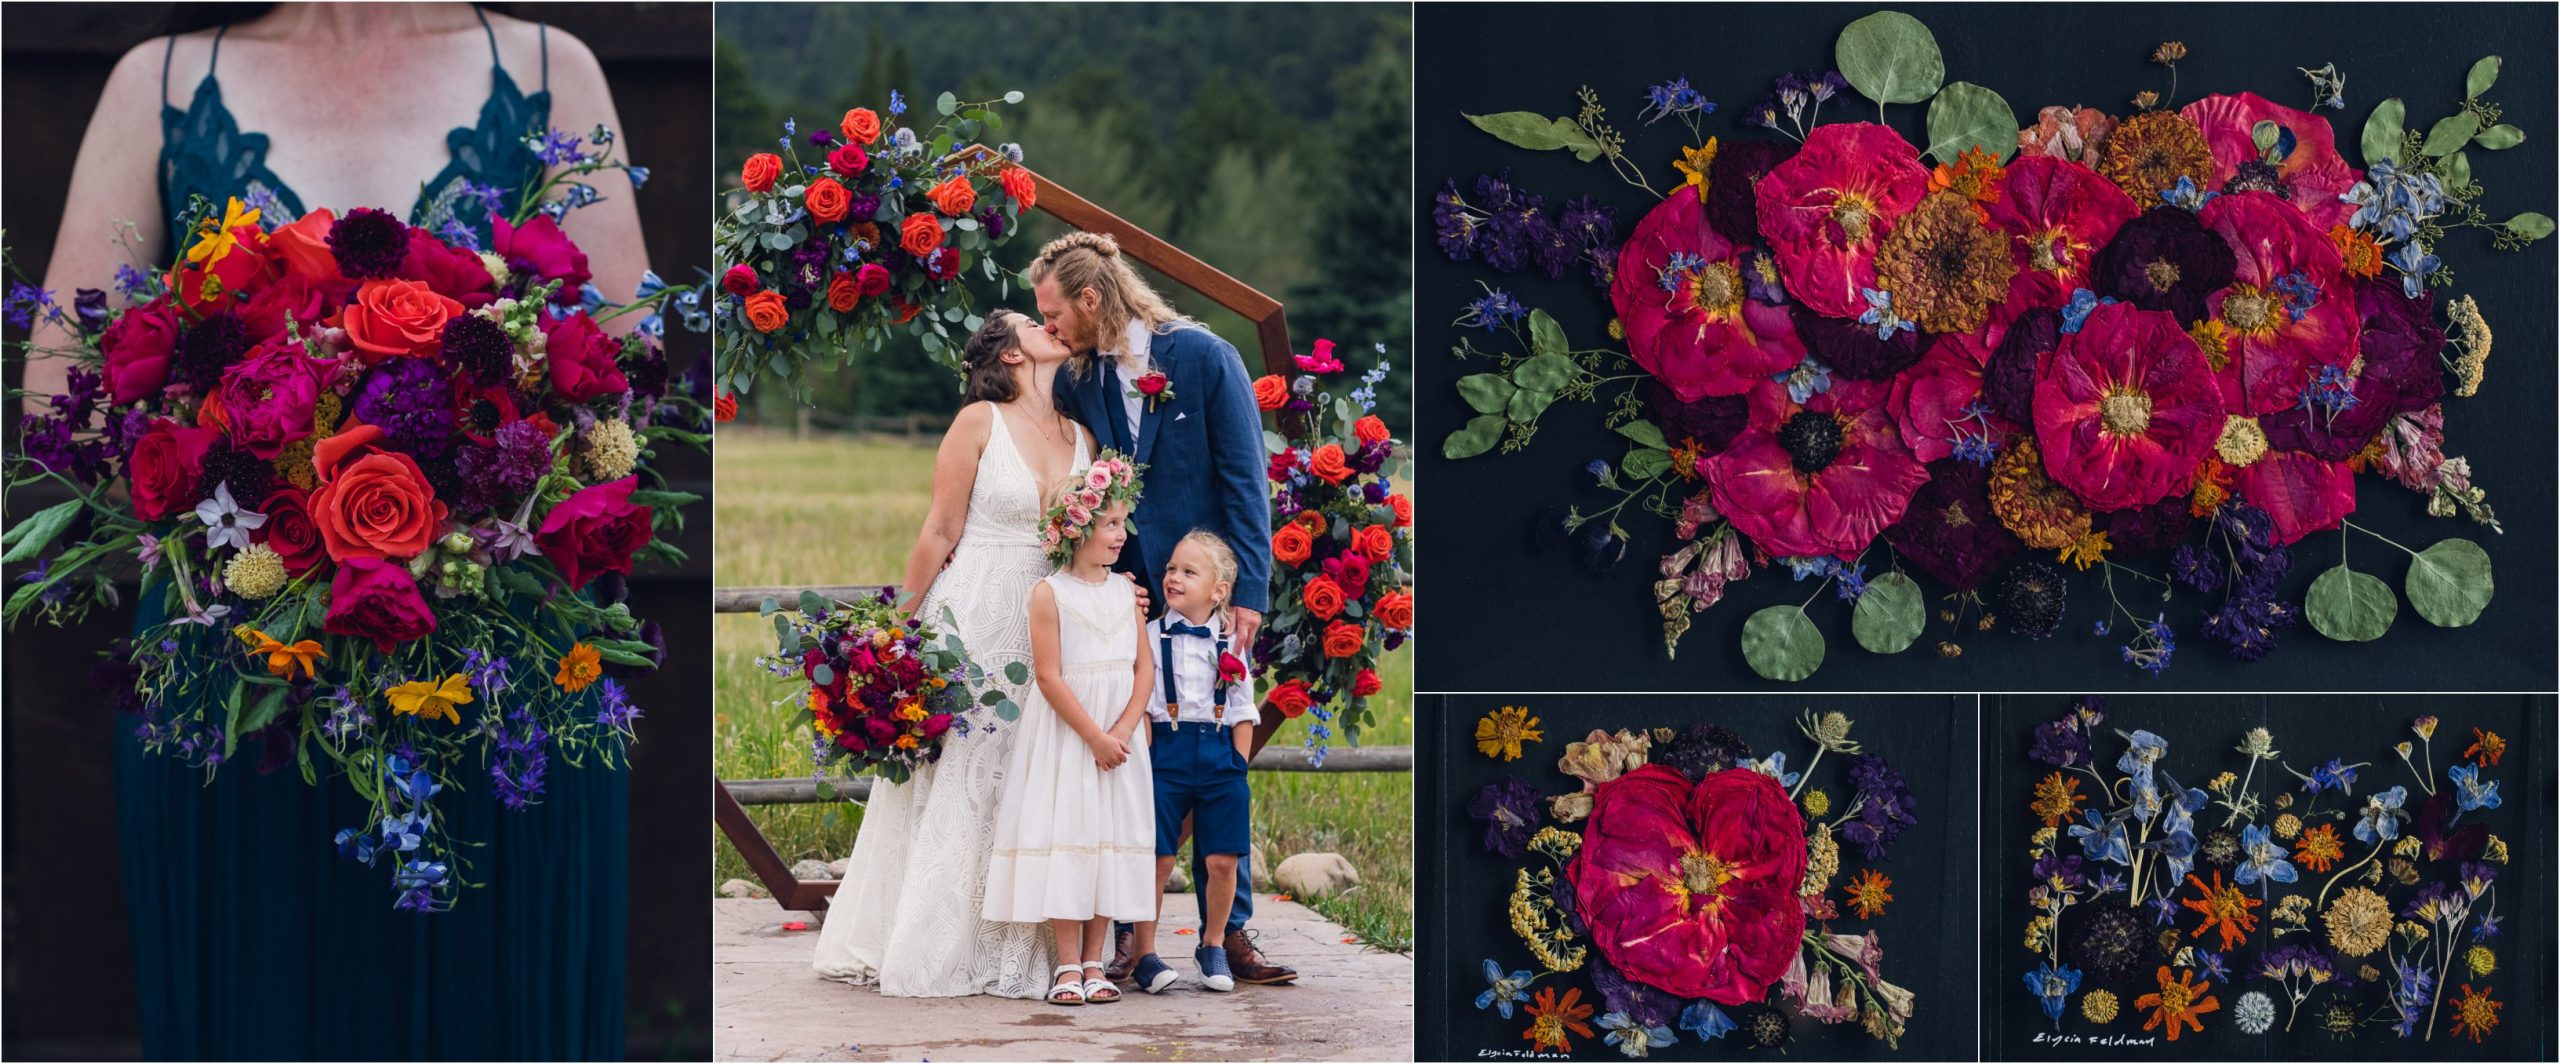 rainbow jewel tone wedding bouquet transformed into pressed preservation art